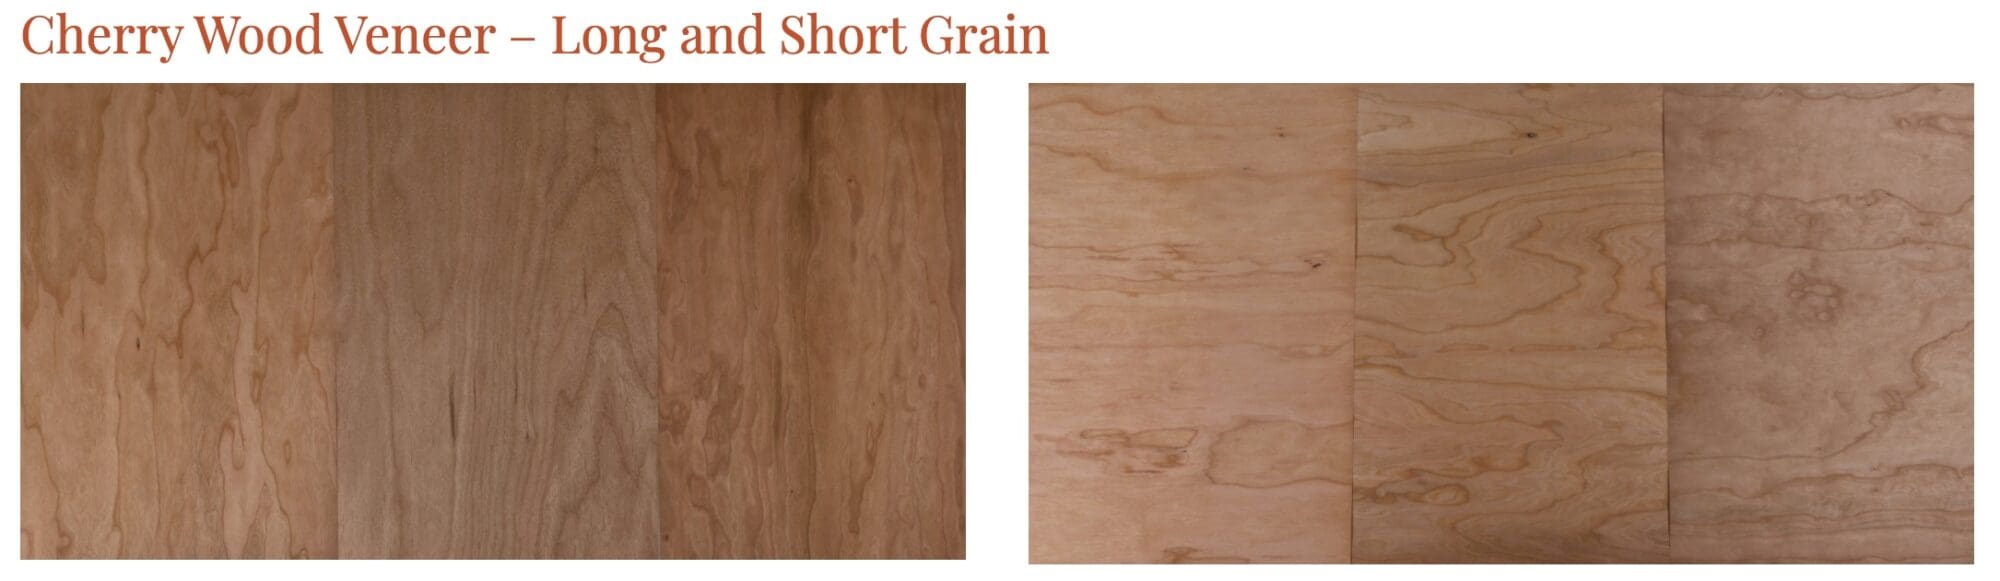 Cherry Wood Veneer Long and Short Grain